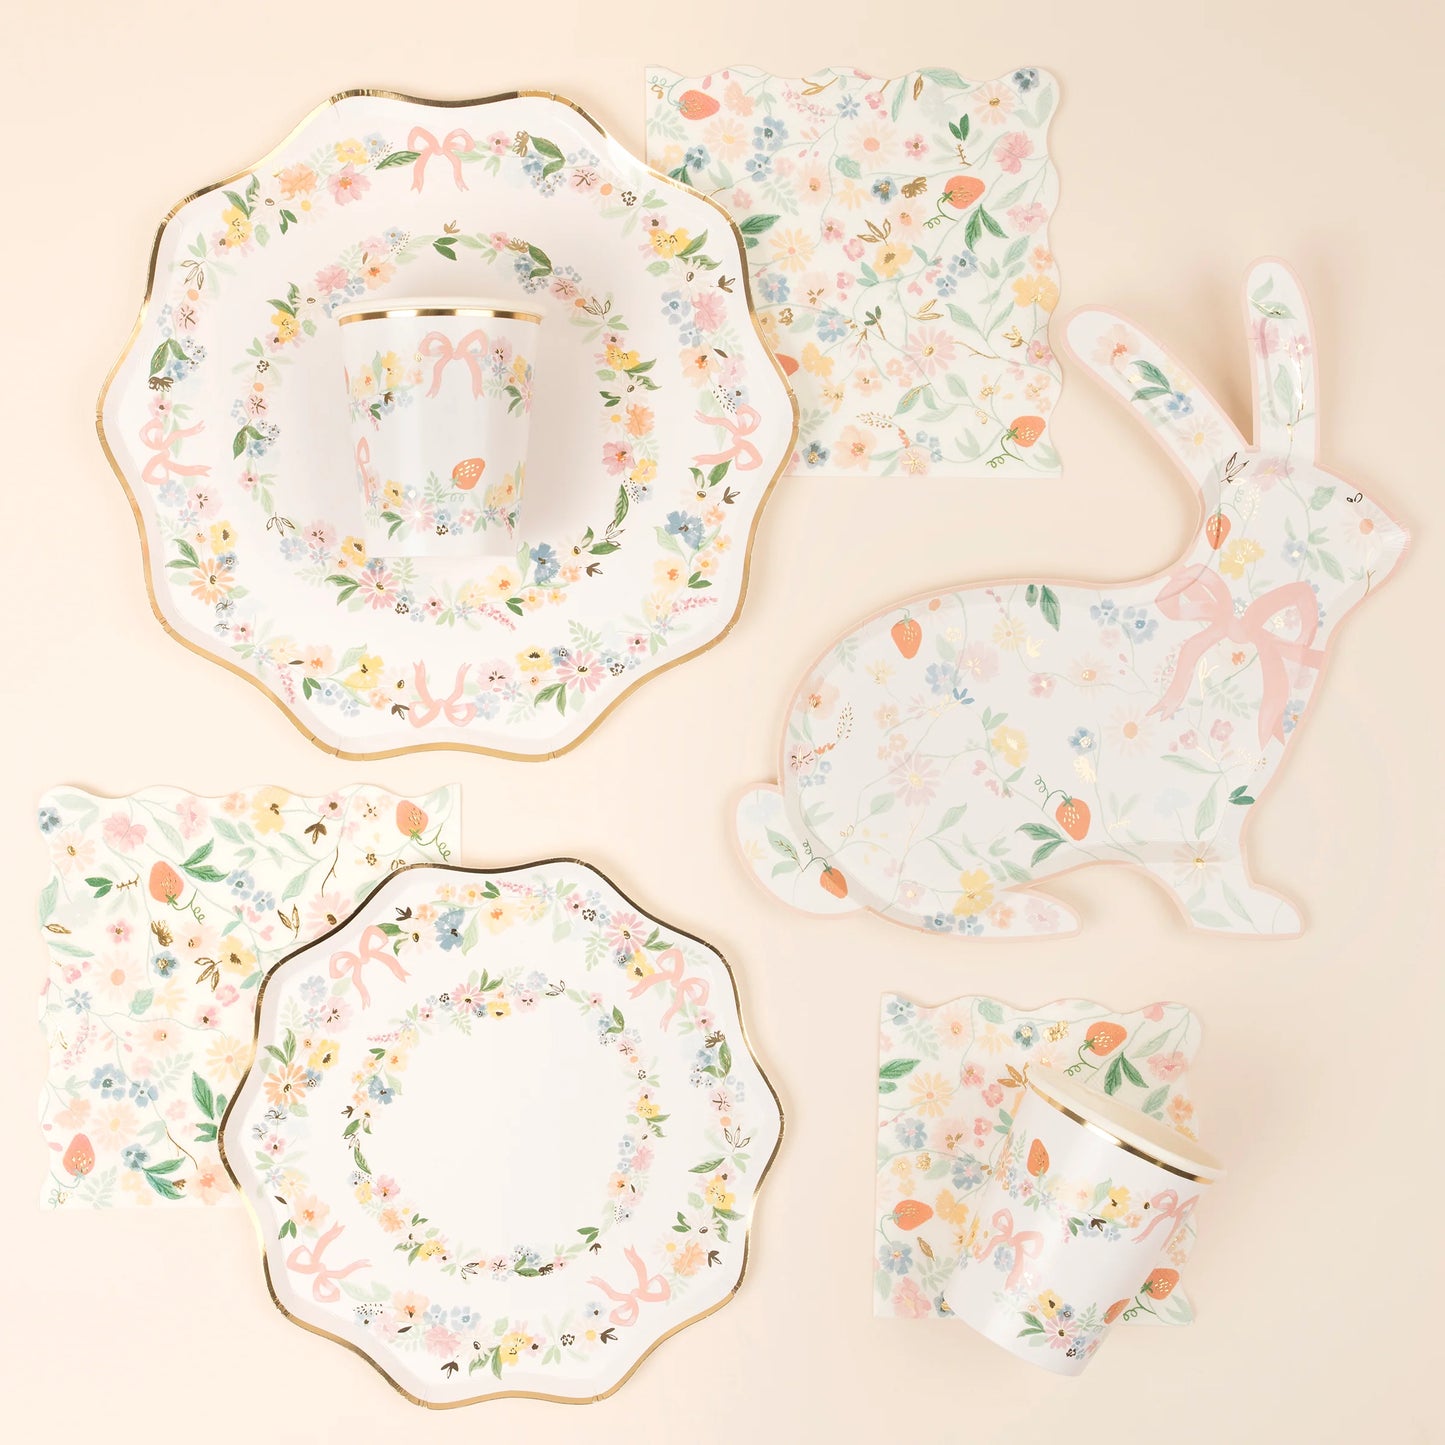 elegant floral dinner plates by meri meri